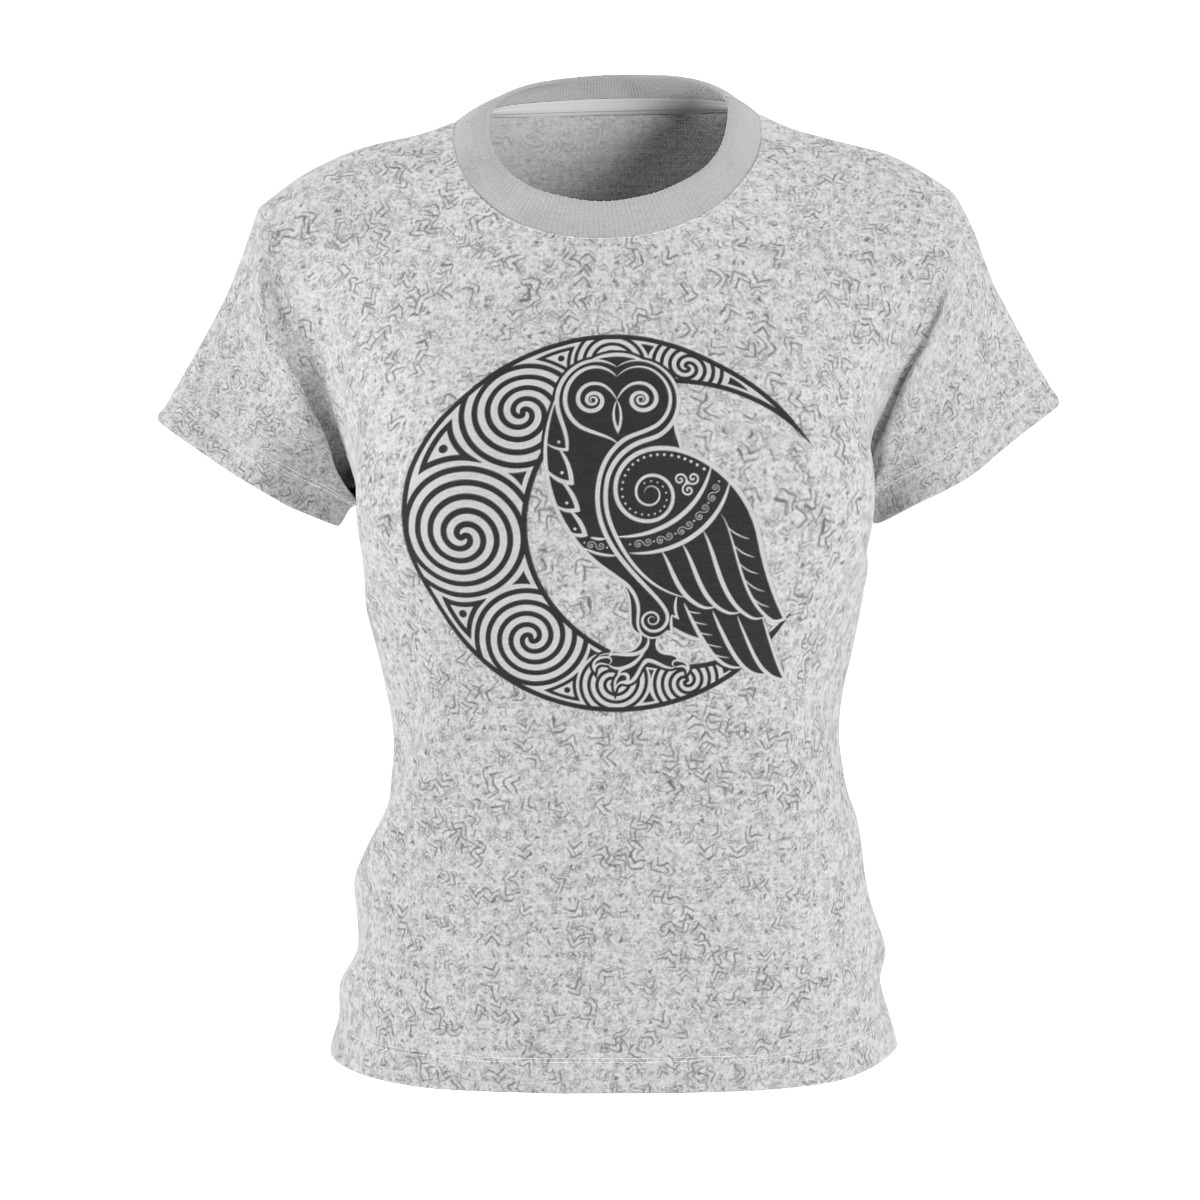 Gray Owl Crescent Moon Women's All Over Print Tee